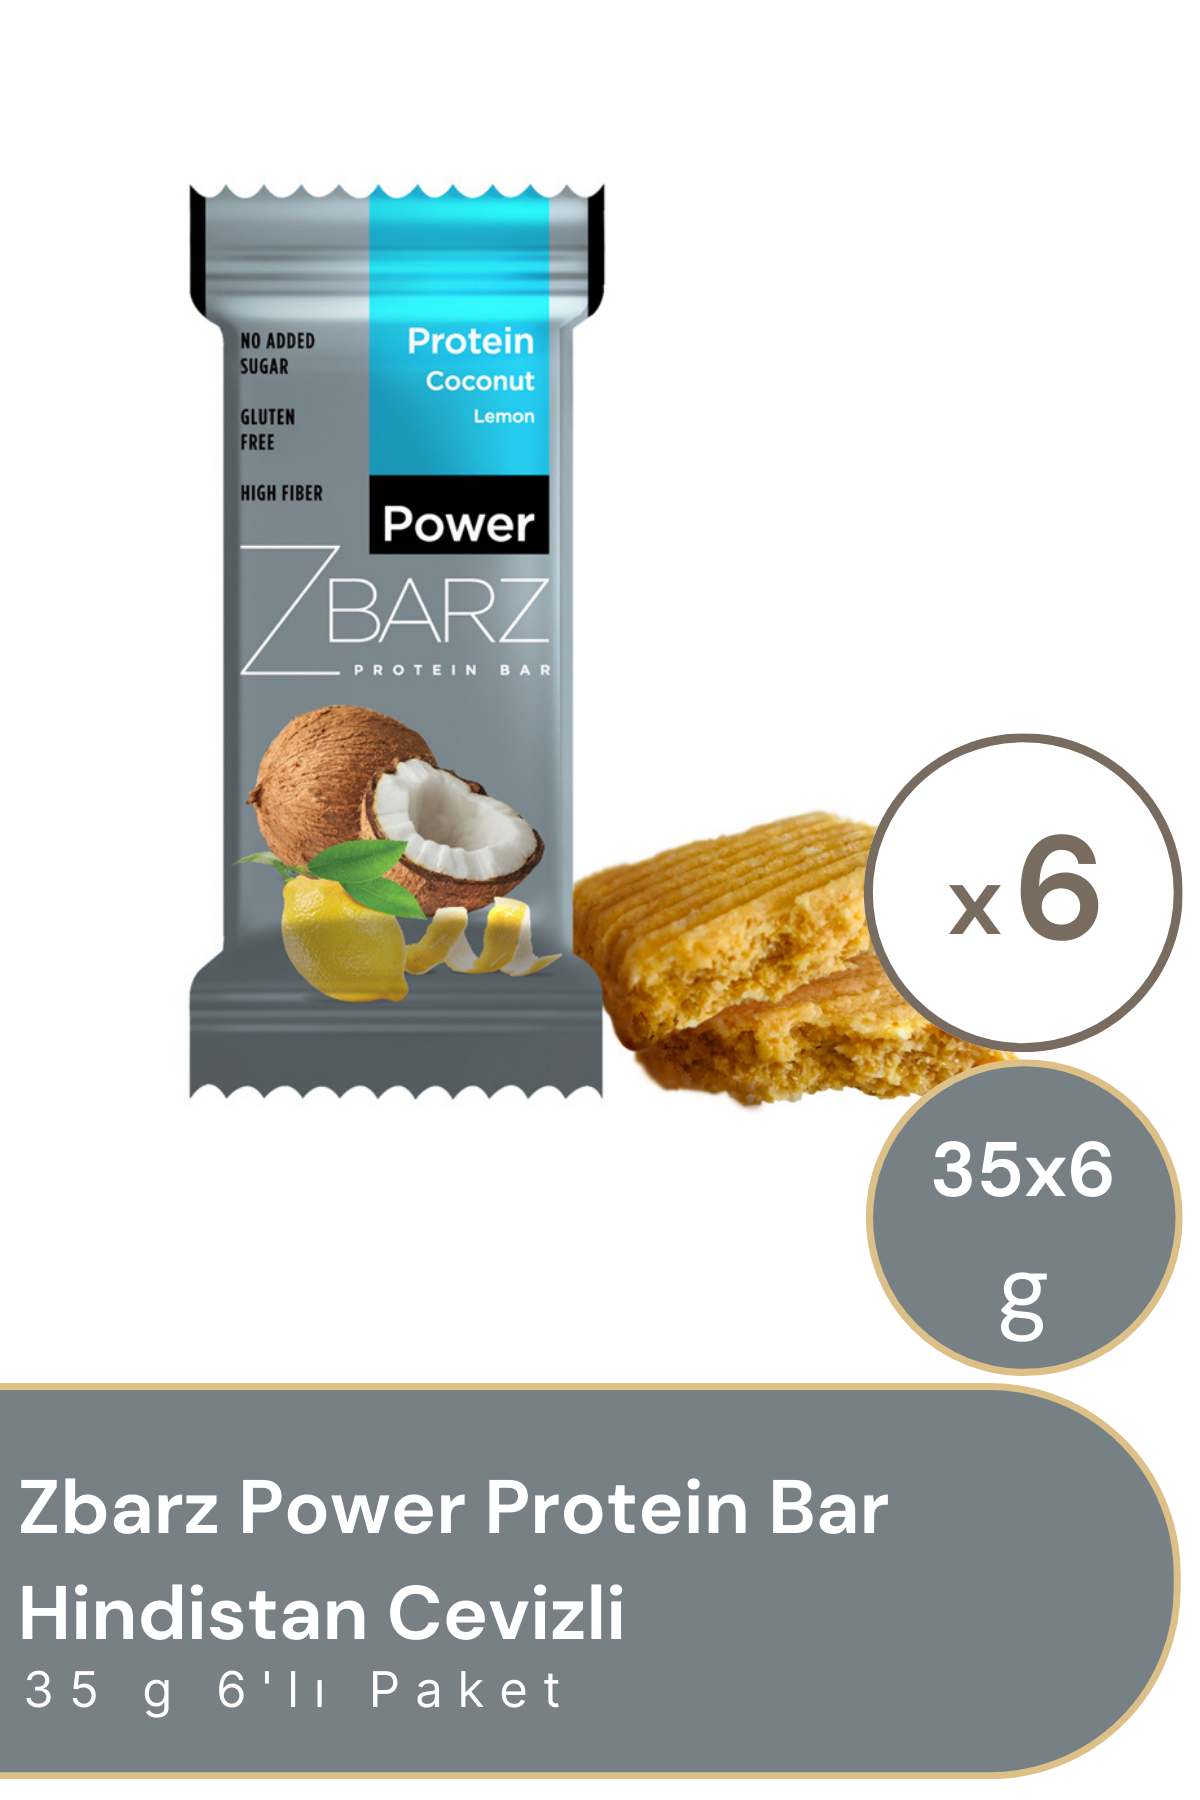 Zbarz Power Protein Bar Hindistan Cevizli - Limonlu 35 g 6'lı Paket